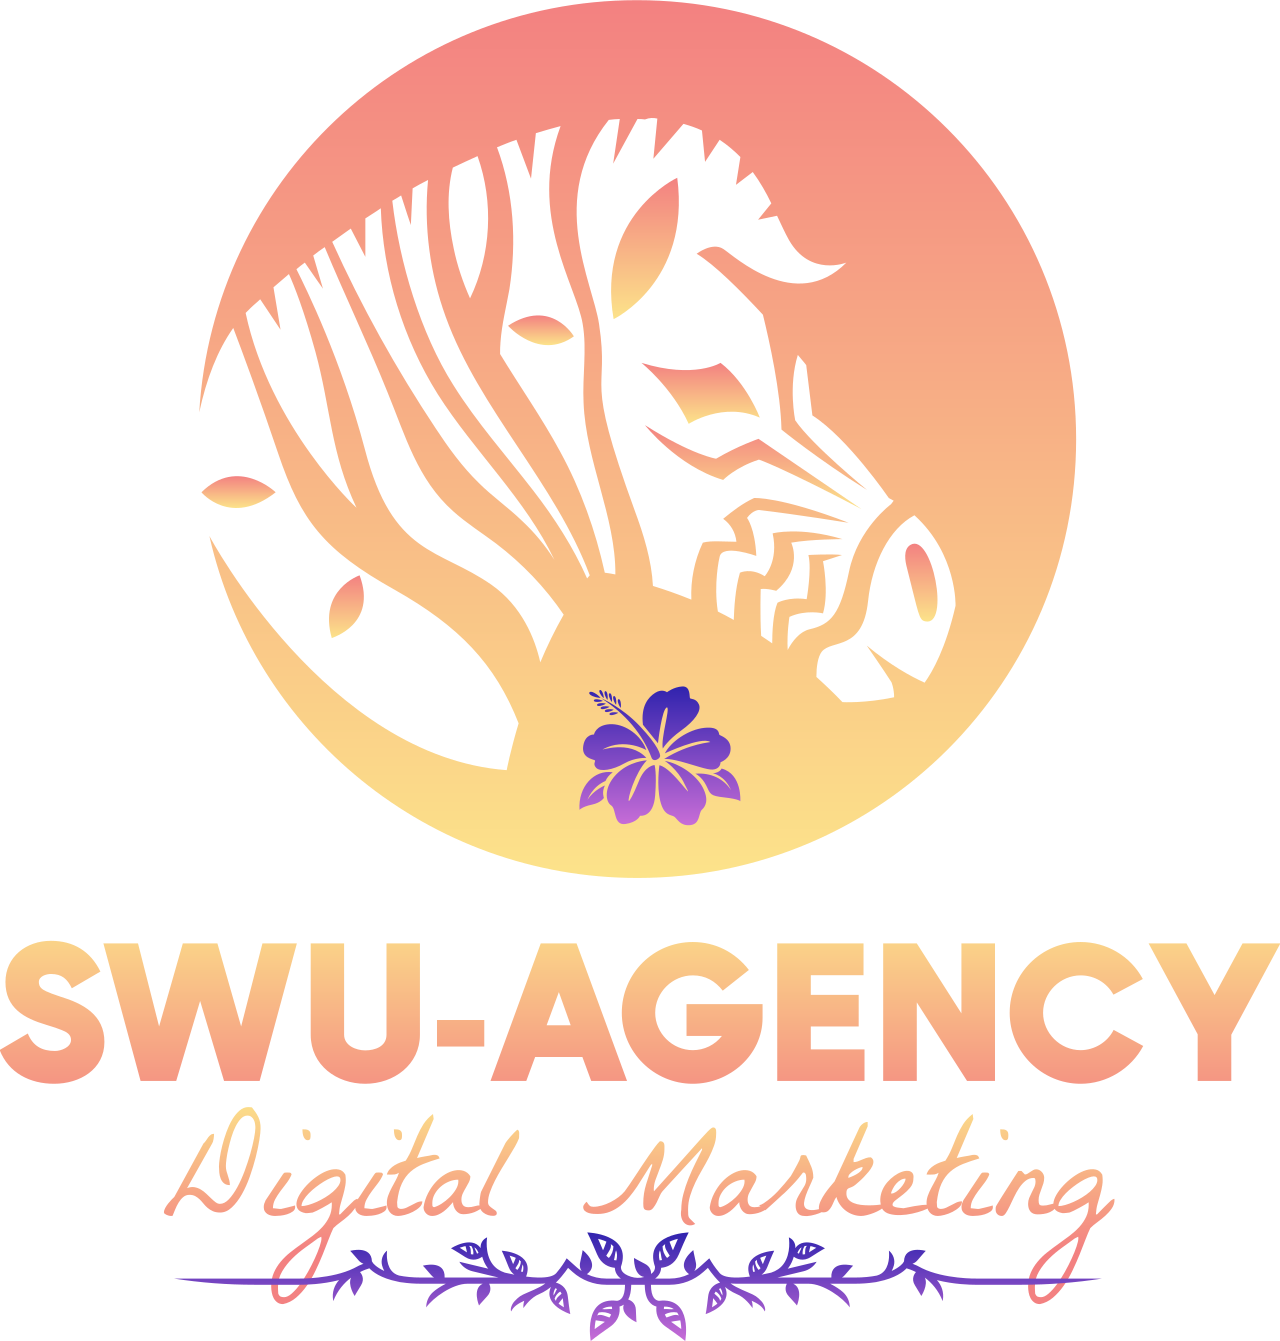 SWU-Agency's web page